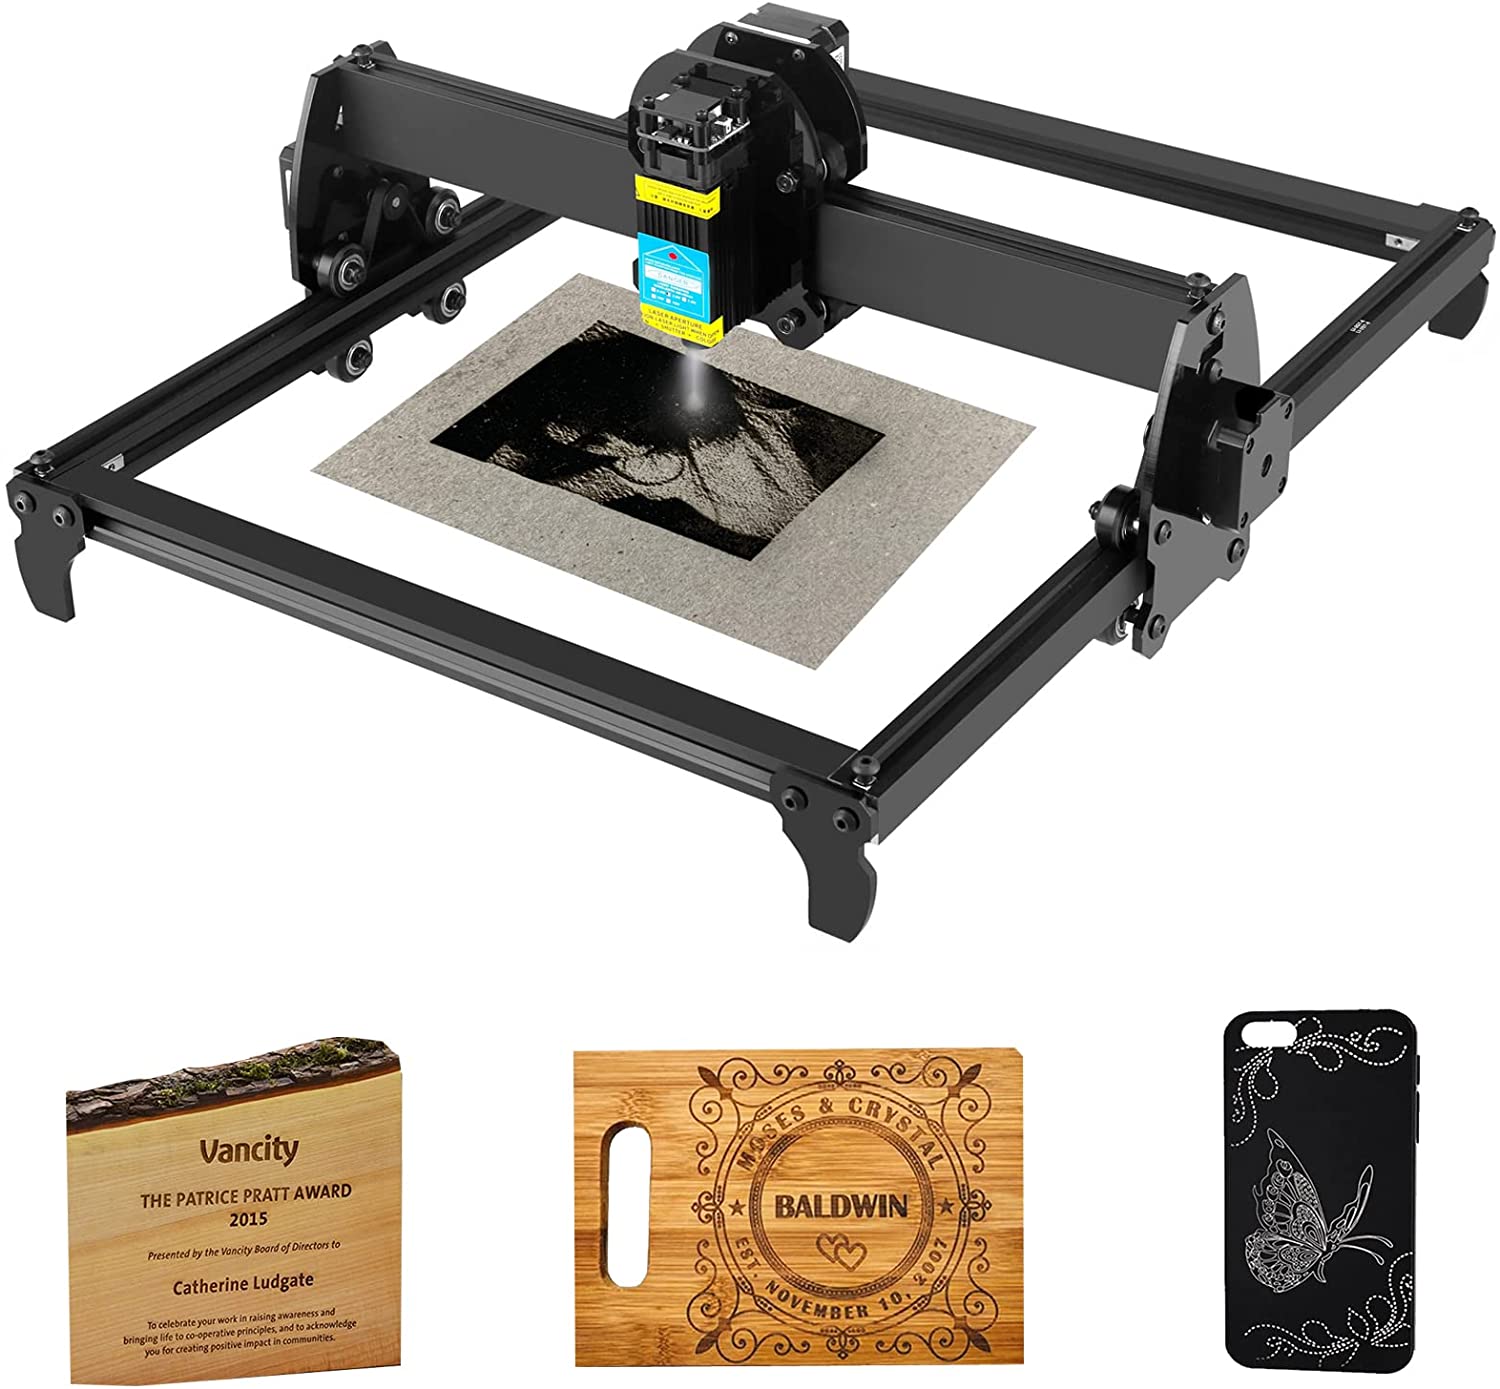 Laser Engraving Cutting Machine, Eye Protection Fixed-Focus DIY Desktop Printer Logo Picture Marking Laser Cutter for Wood, Leather, Plastic, etc.